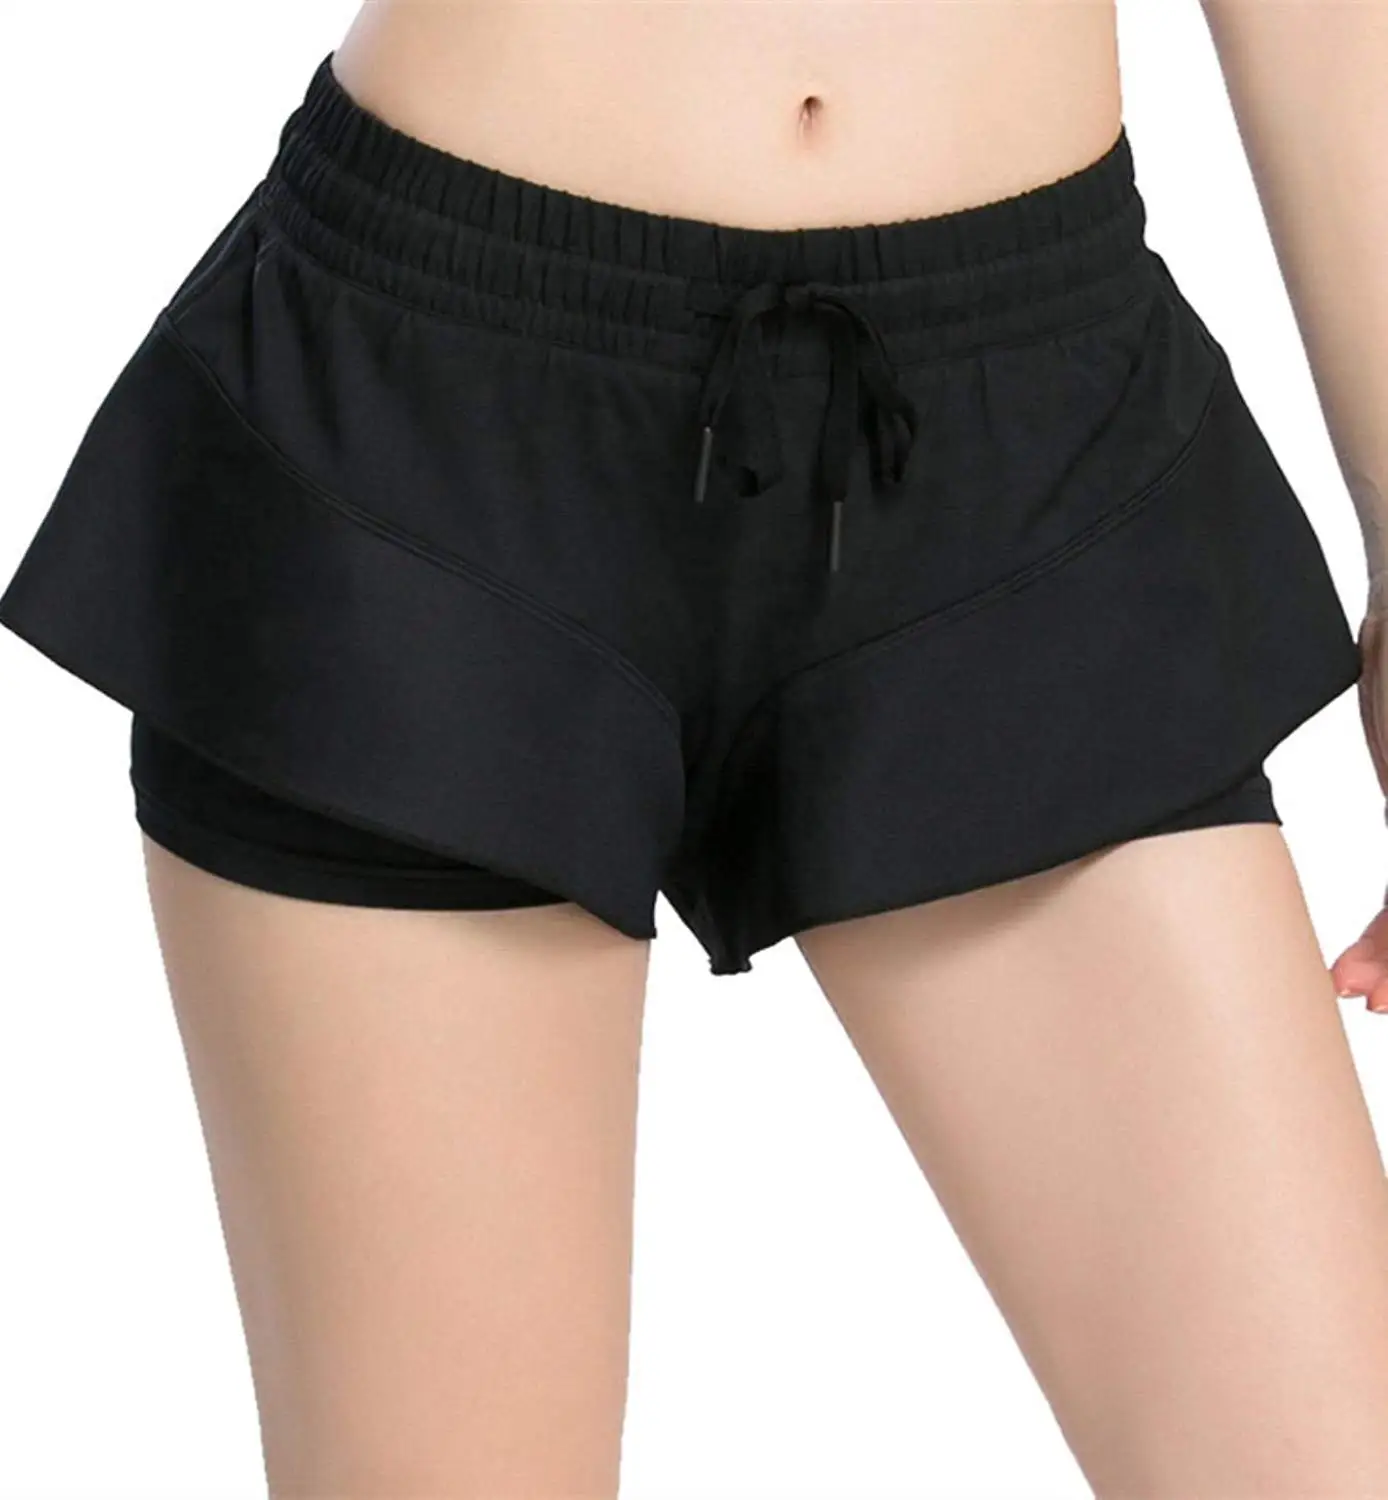 Cheap Gym Shorts Bulge, find Gym Shorts Bulge deals on line at Alibaba.com